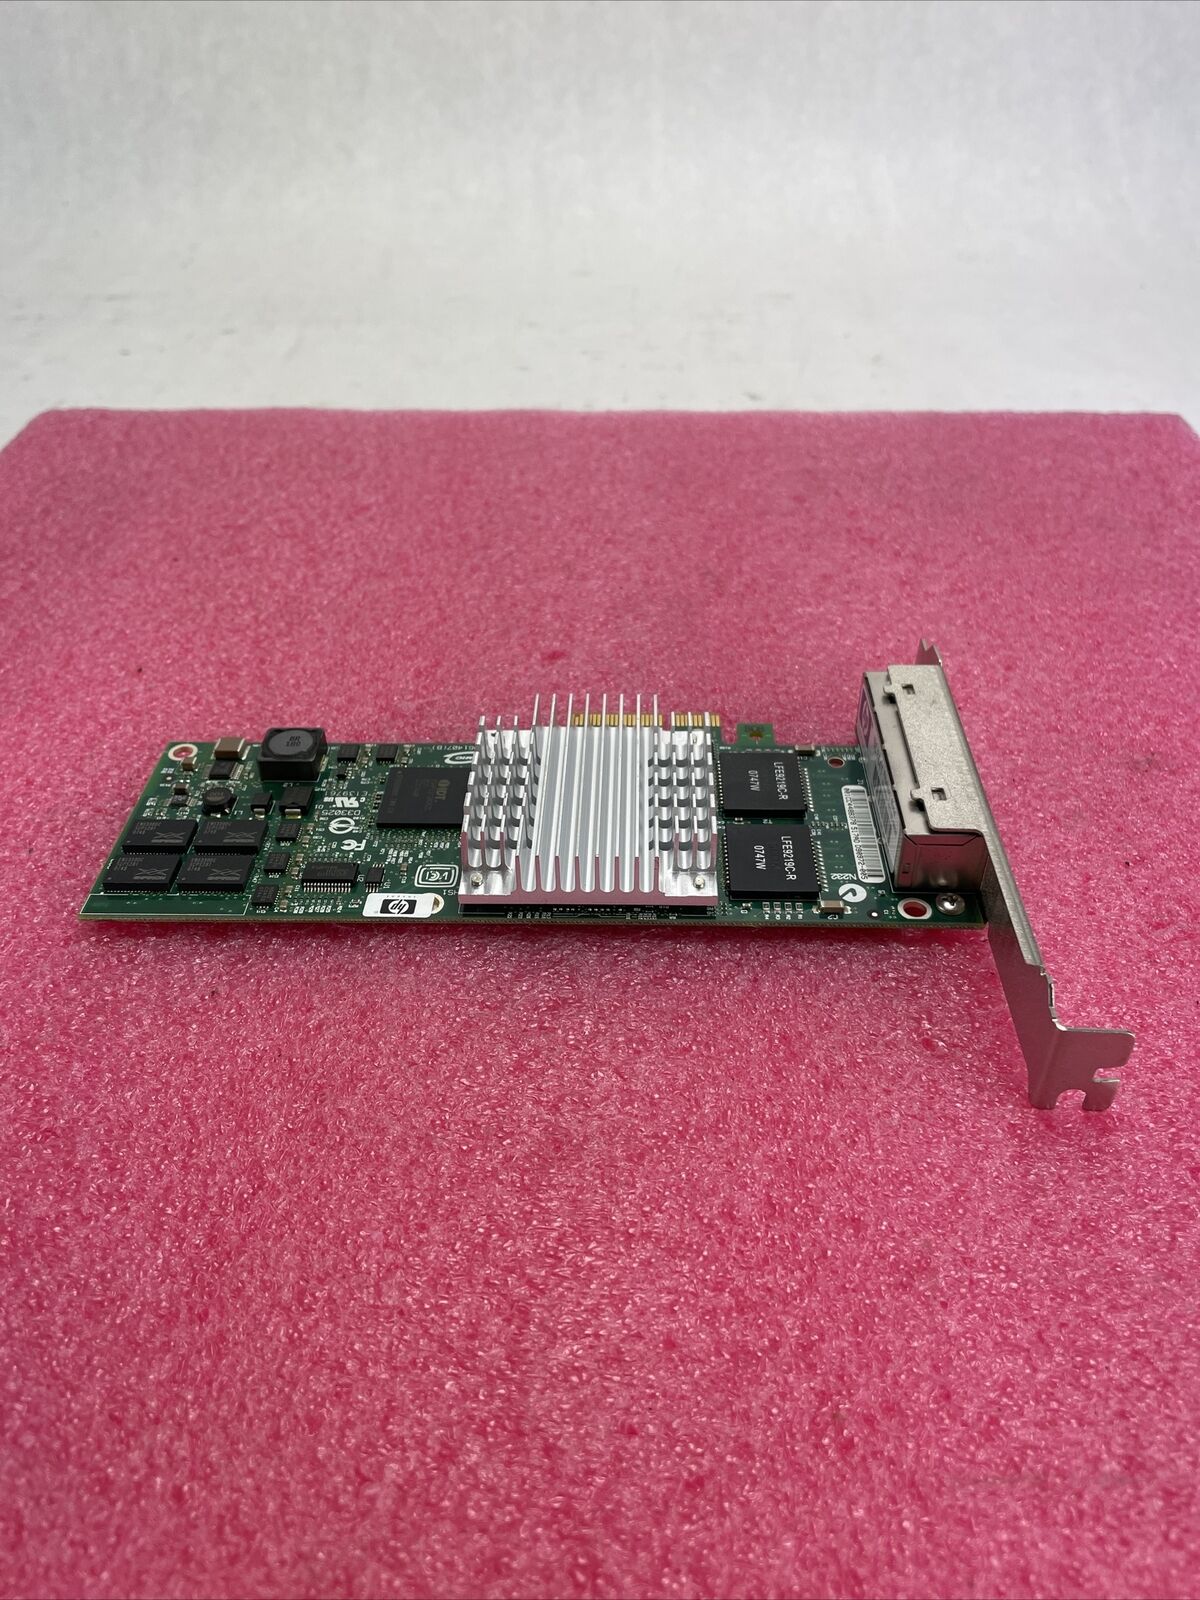 HP NC364T PCI-E 4-PORT GIGABIT SERVER ADAPTER